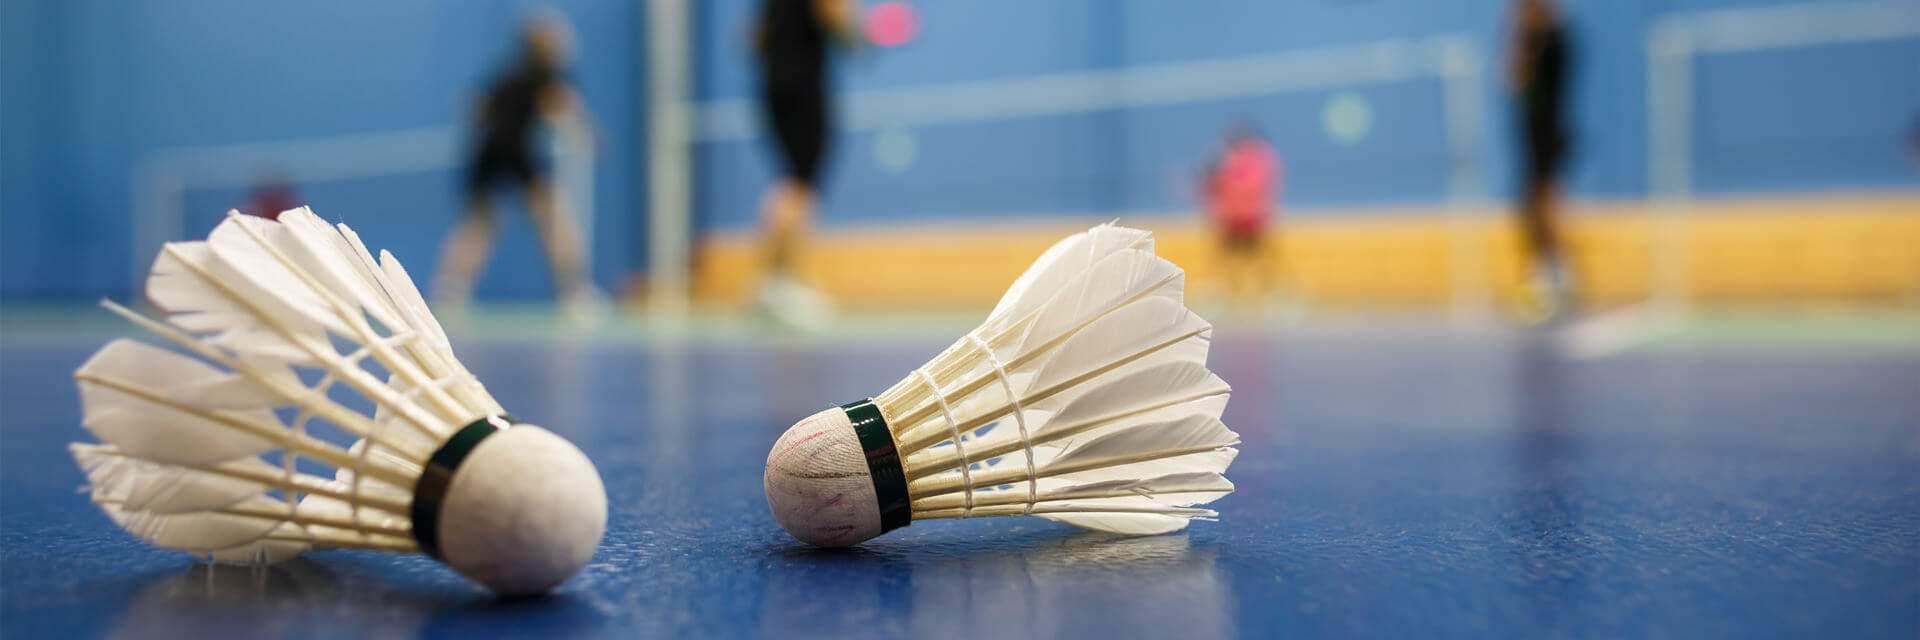 sport_badminton